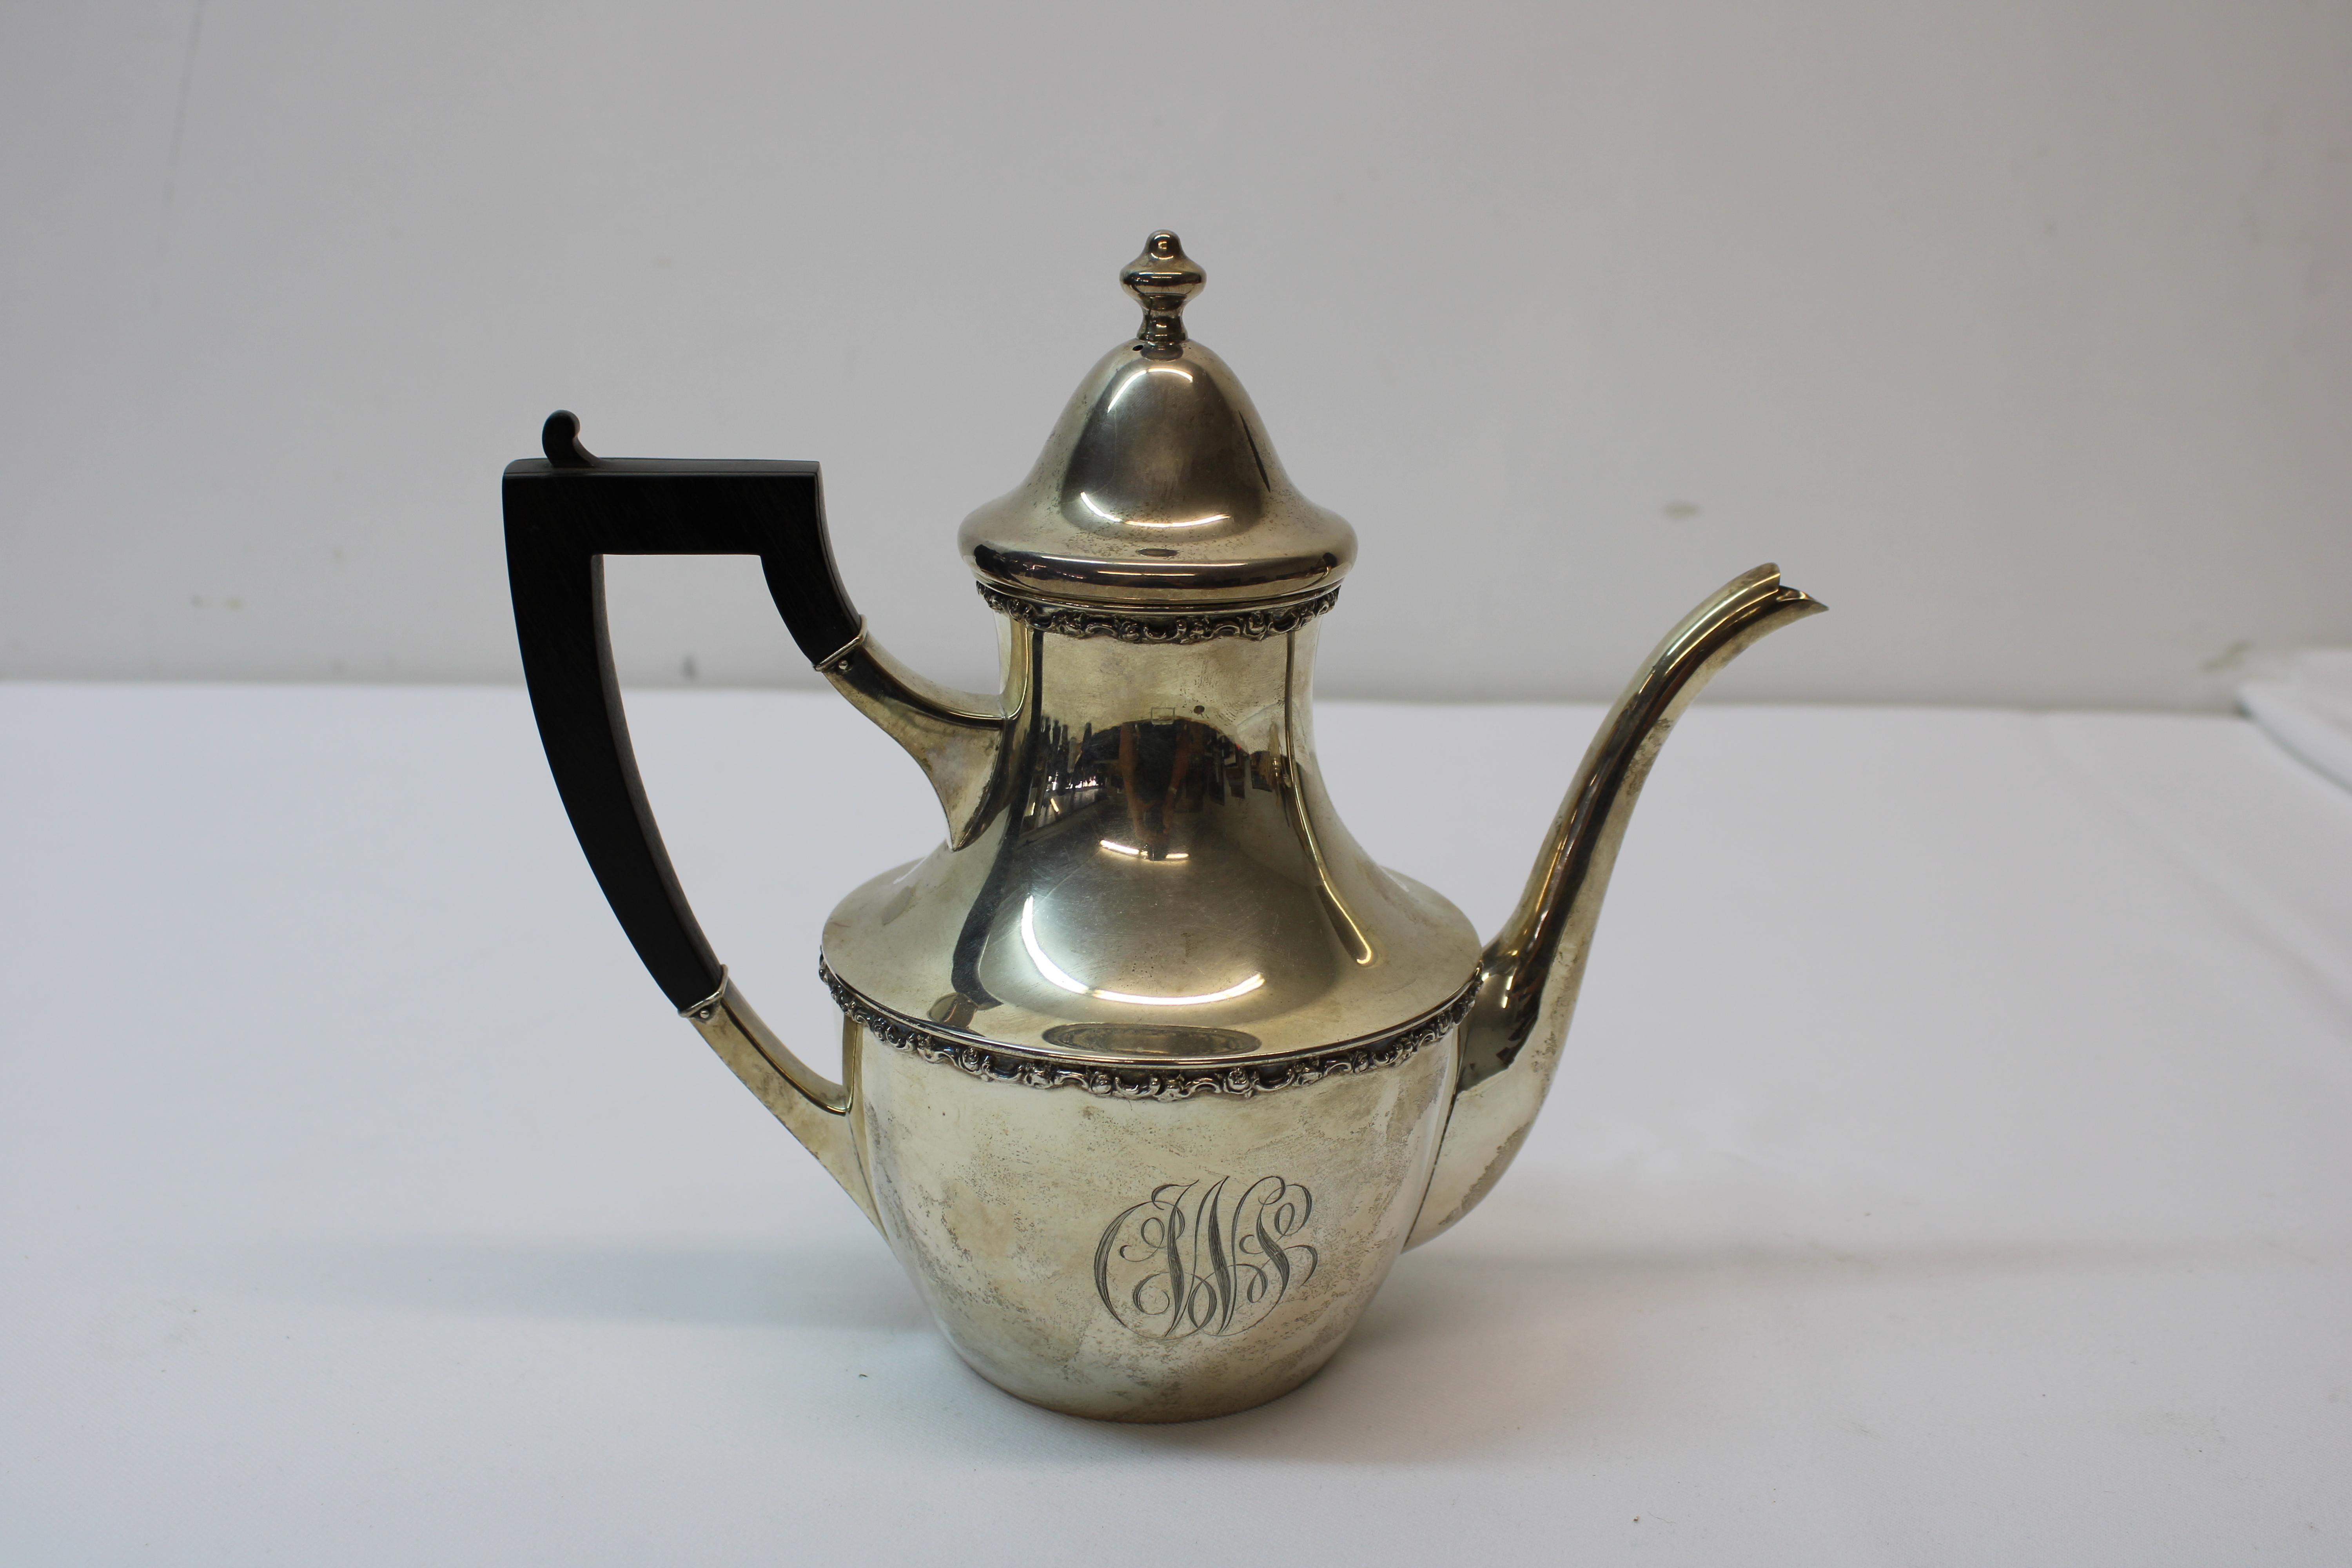 C. 20th century beautiful sterling silver Shreve & Co tea / coffee set w/ monogram

Measurements of items individually

Large tea pot
Height - 8.50
Width - 5.00
Depth - 9.50

Medium tea pot
Height - 6.00
Width - 4.75
Depth - 8.50

Small silver w/ 2